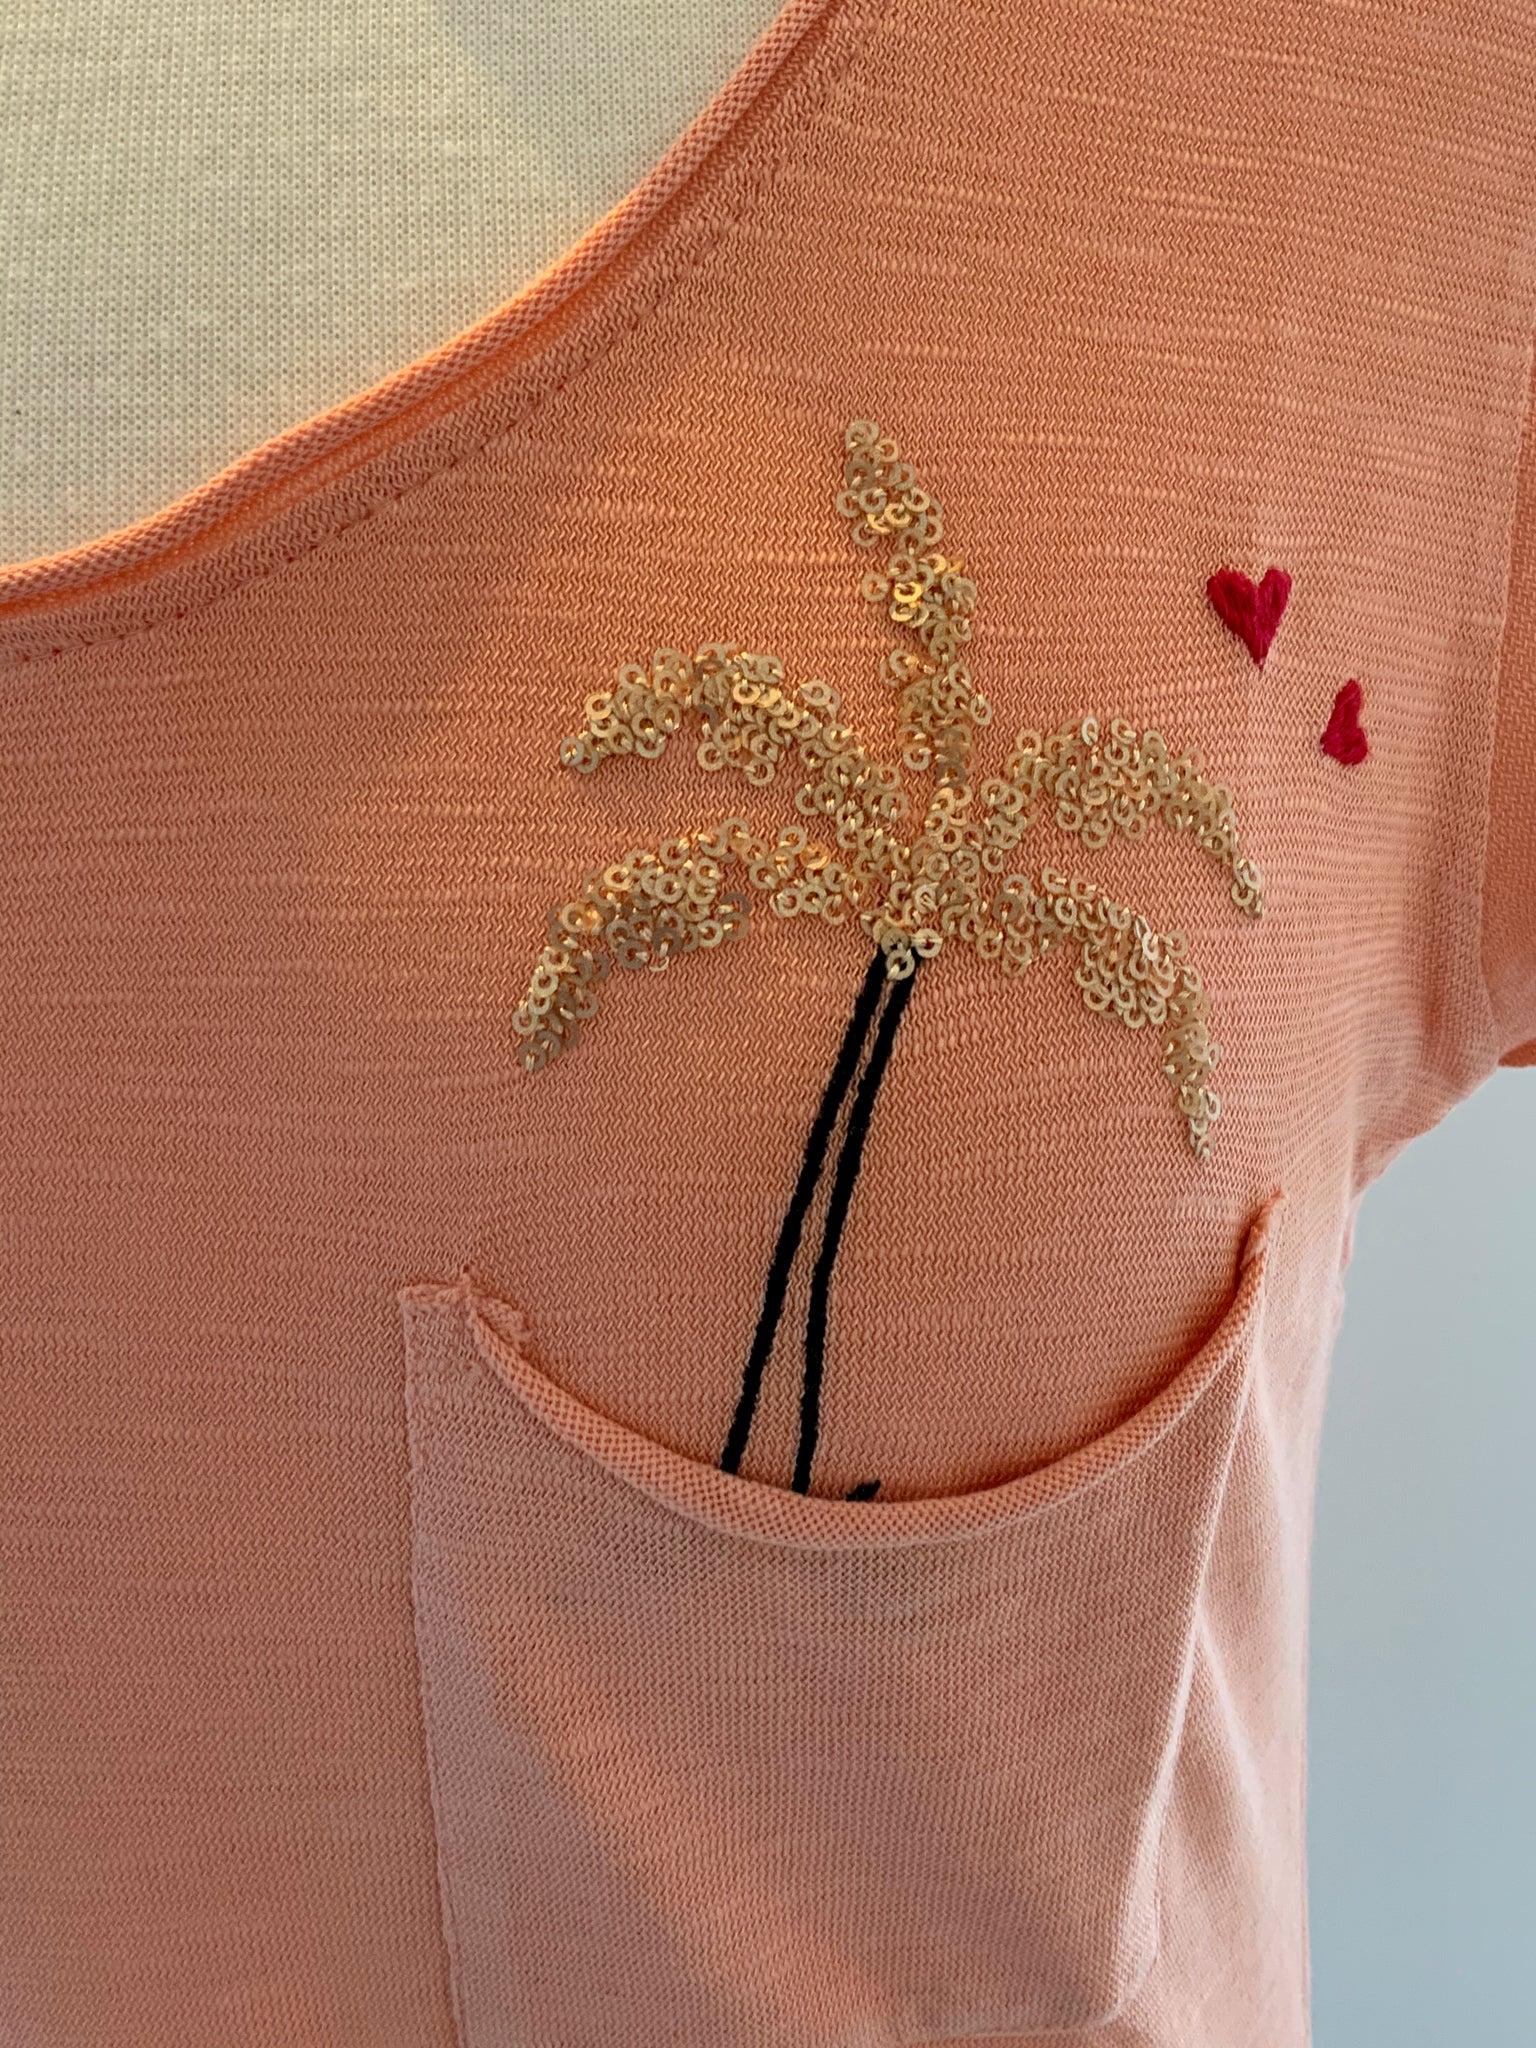 Tee Shirt W/Palm Tree Design